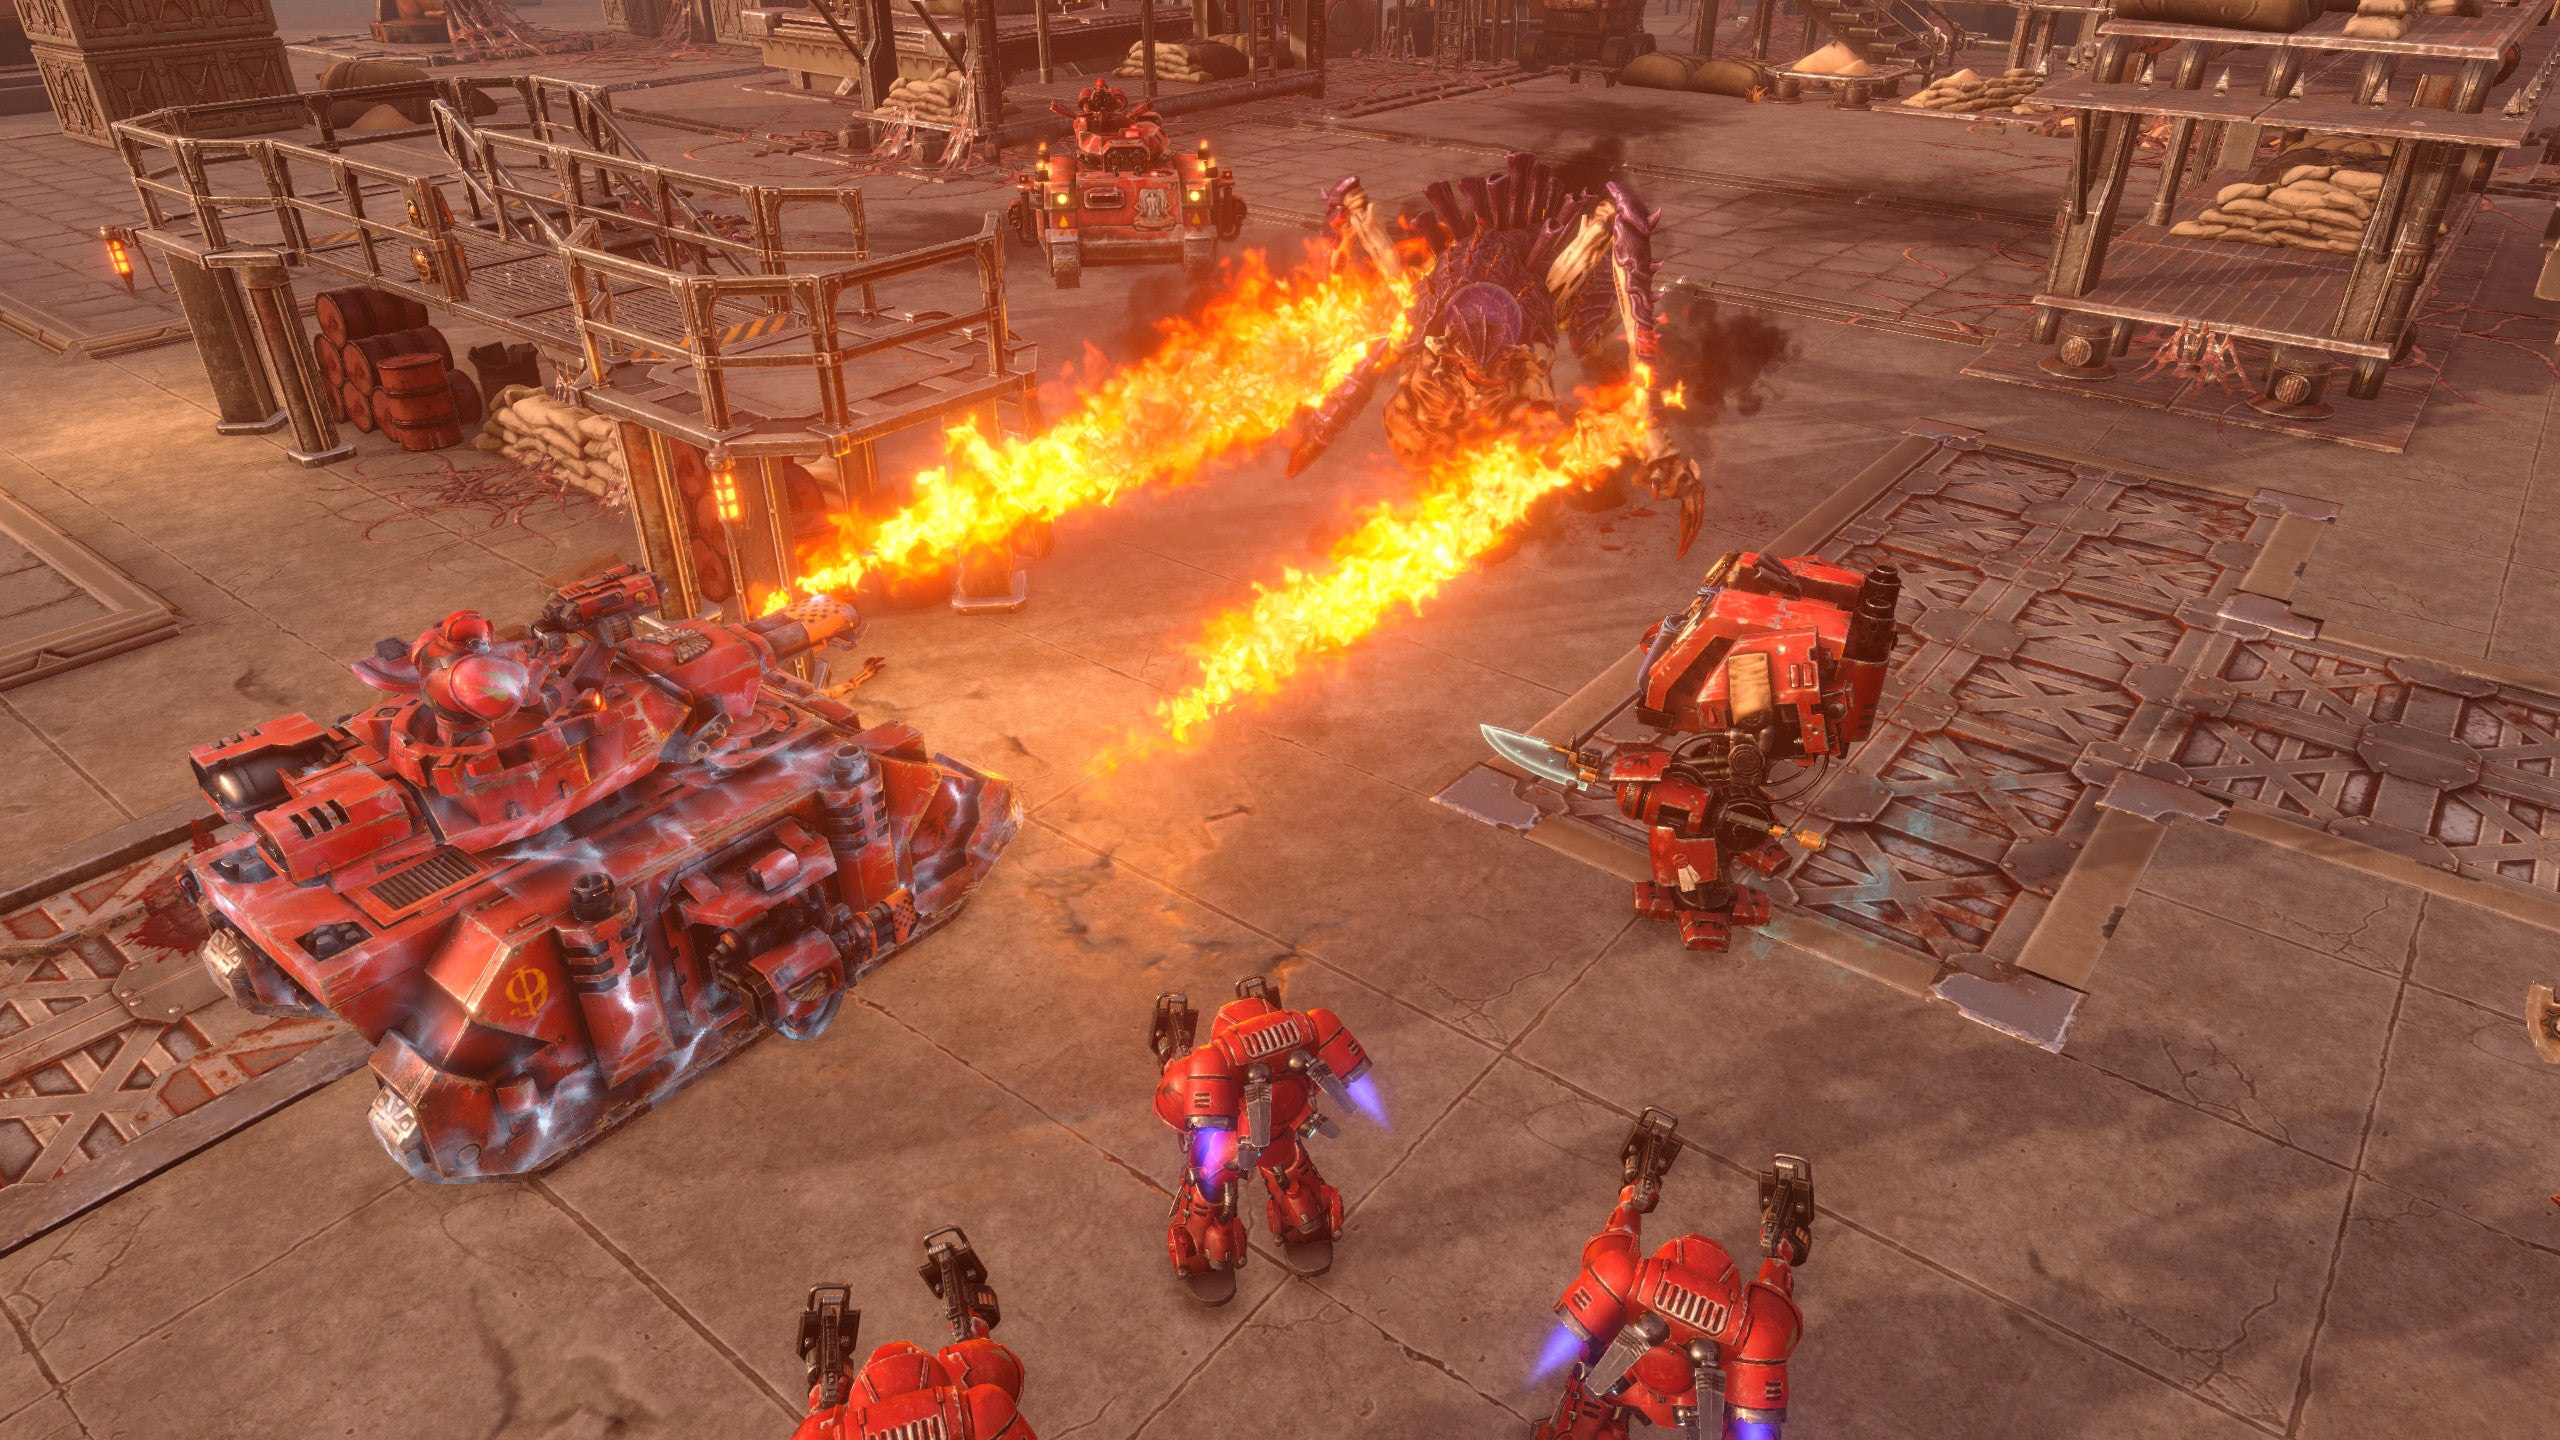 Flaming a big Tyranid in a Warhammer 40,000: Battlesector screenshot.